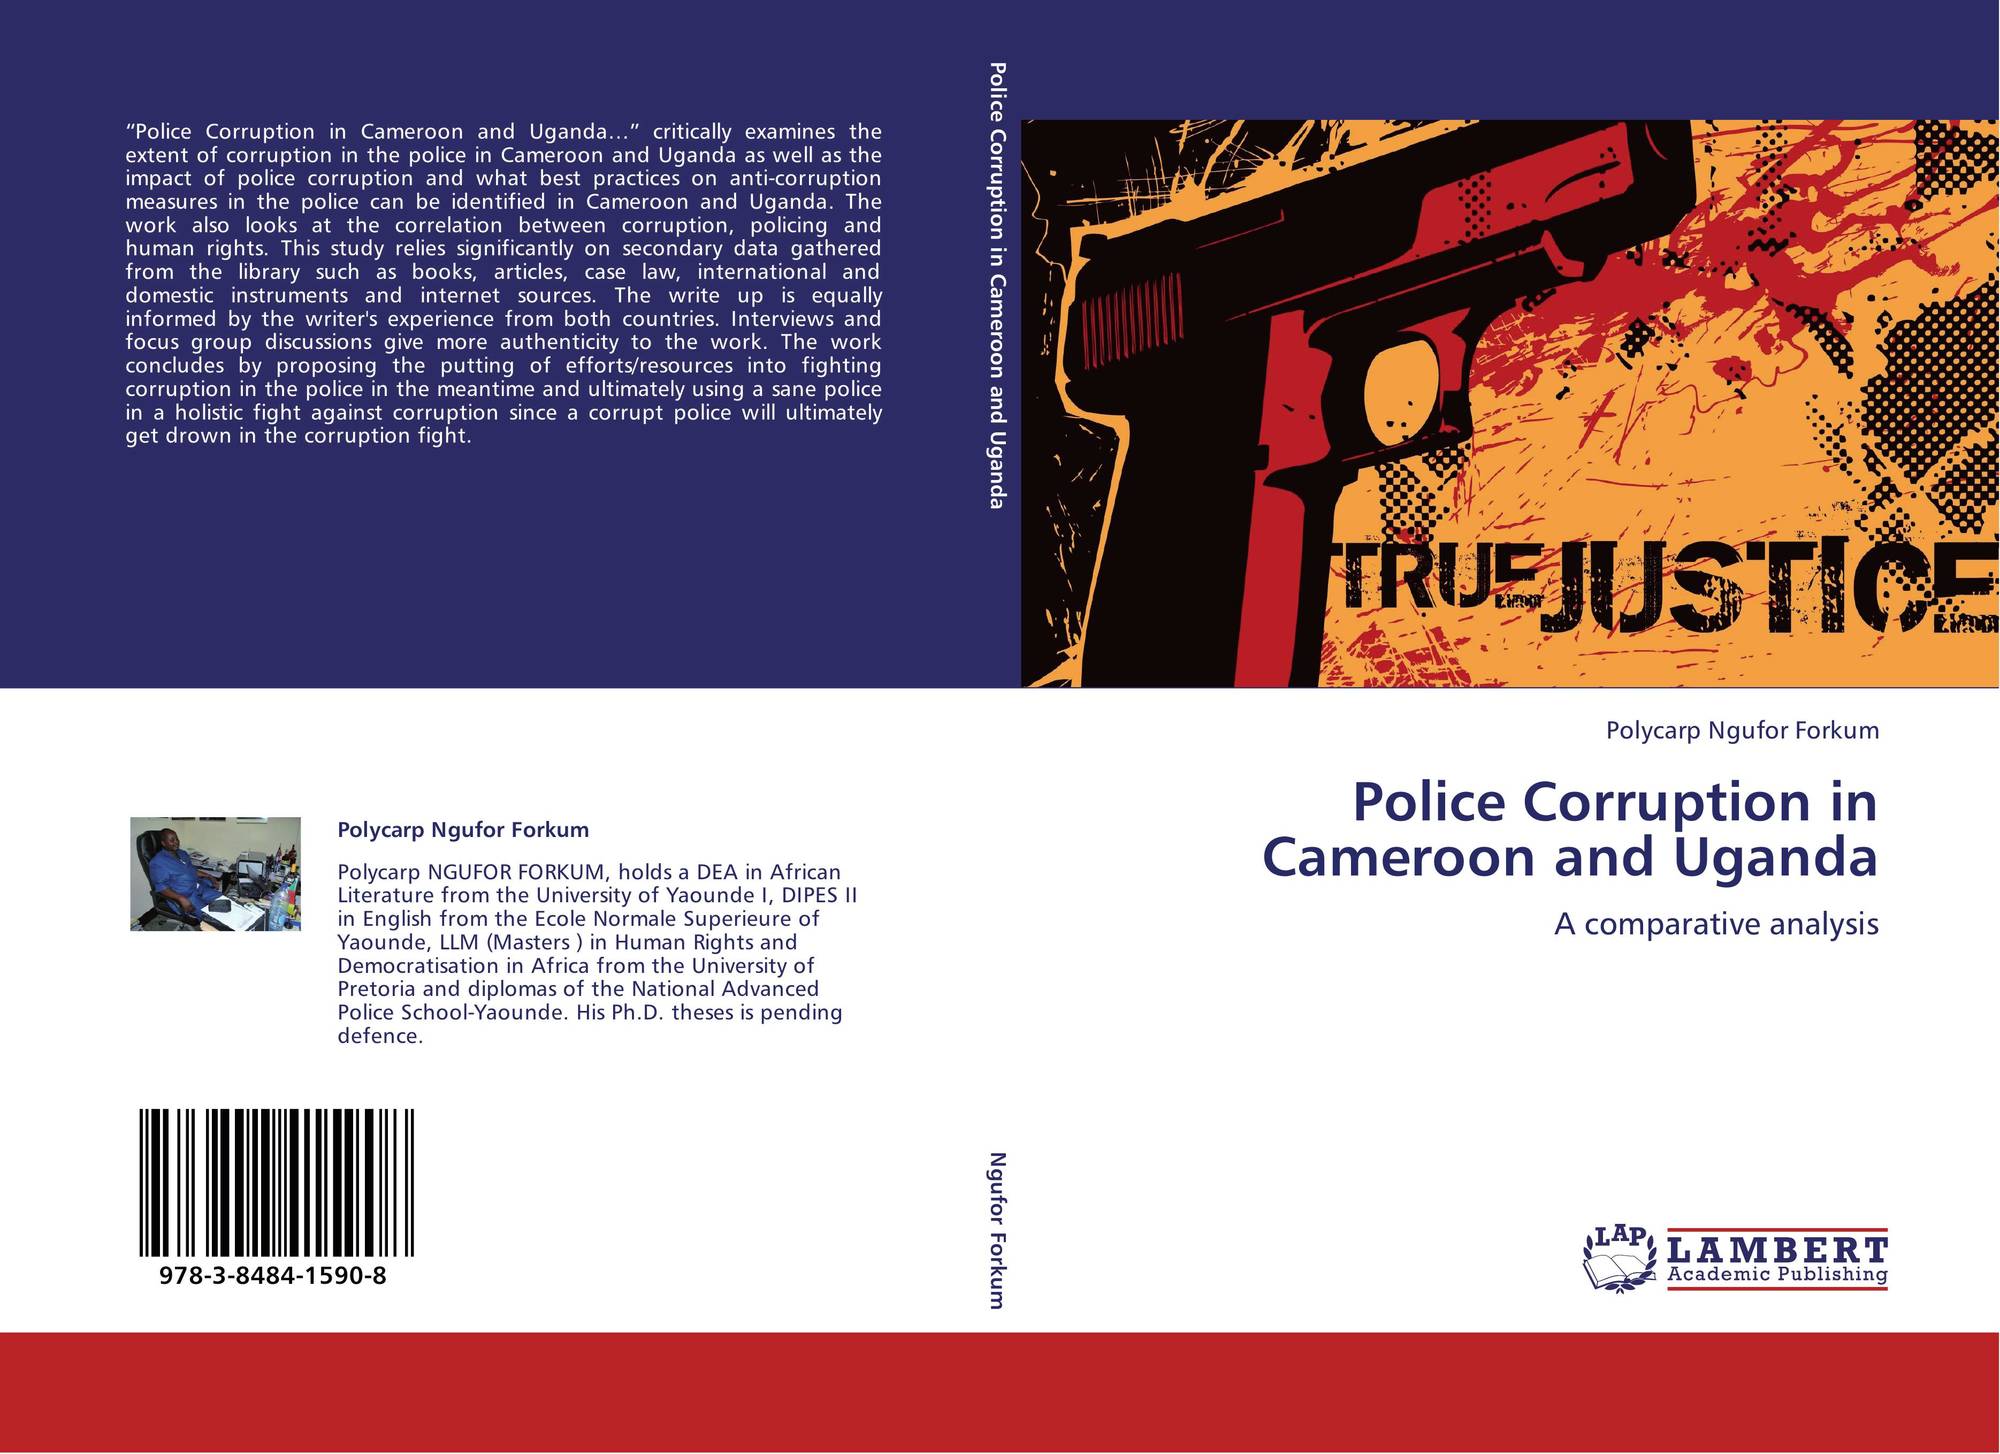 Police Corruption And Corruption